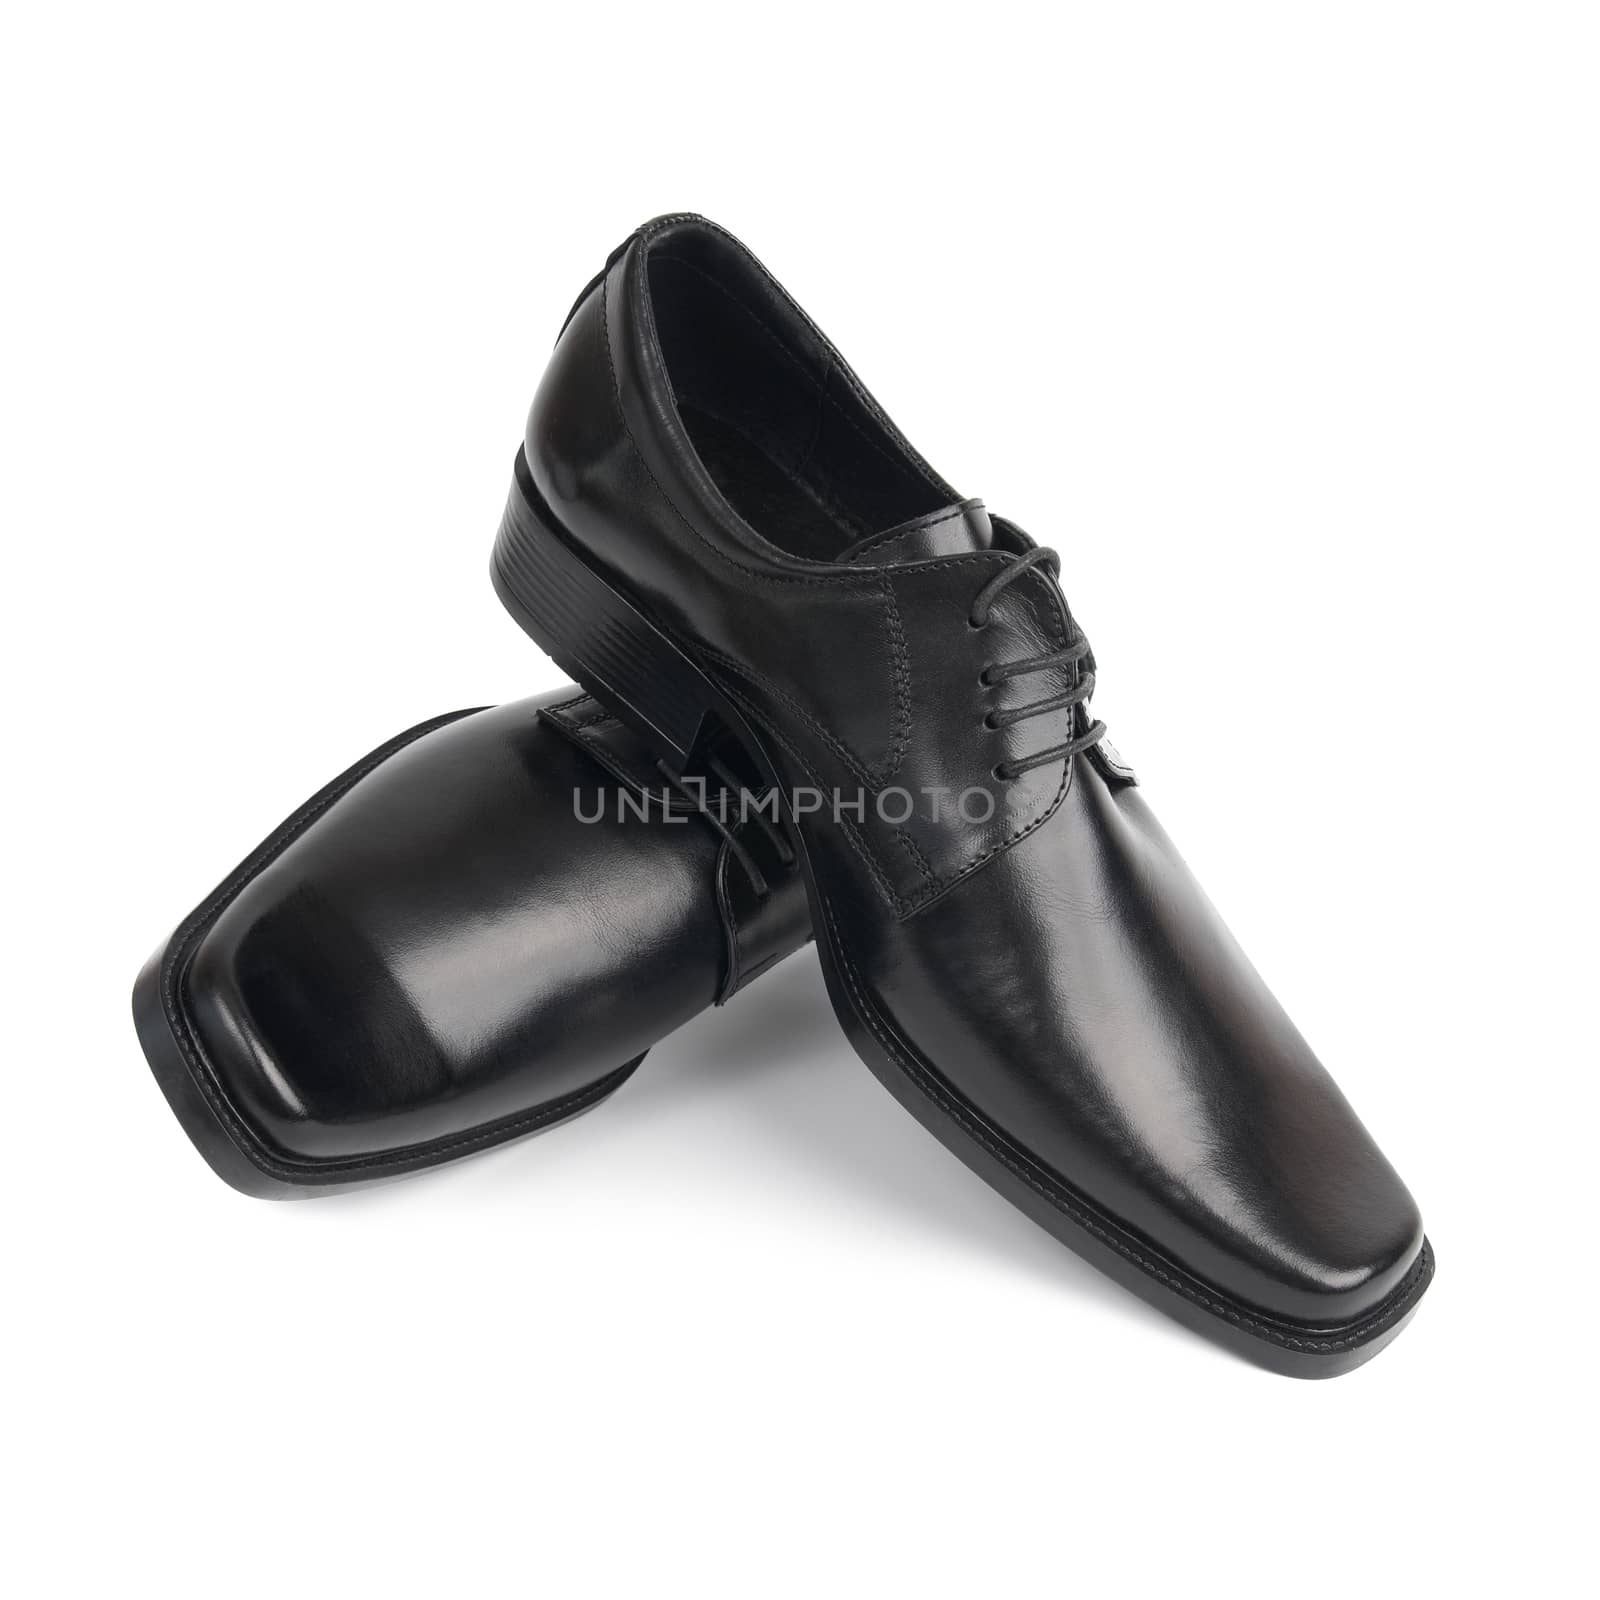 Pair of man's black shoes by vapi